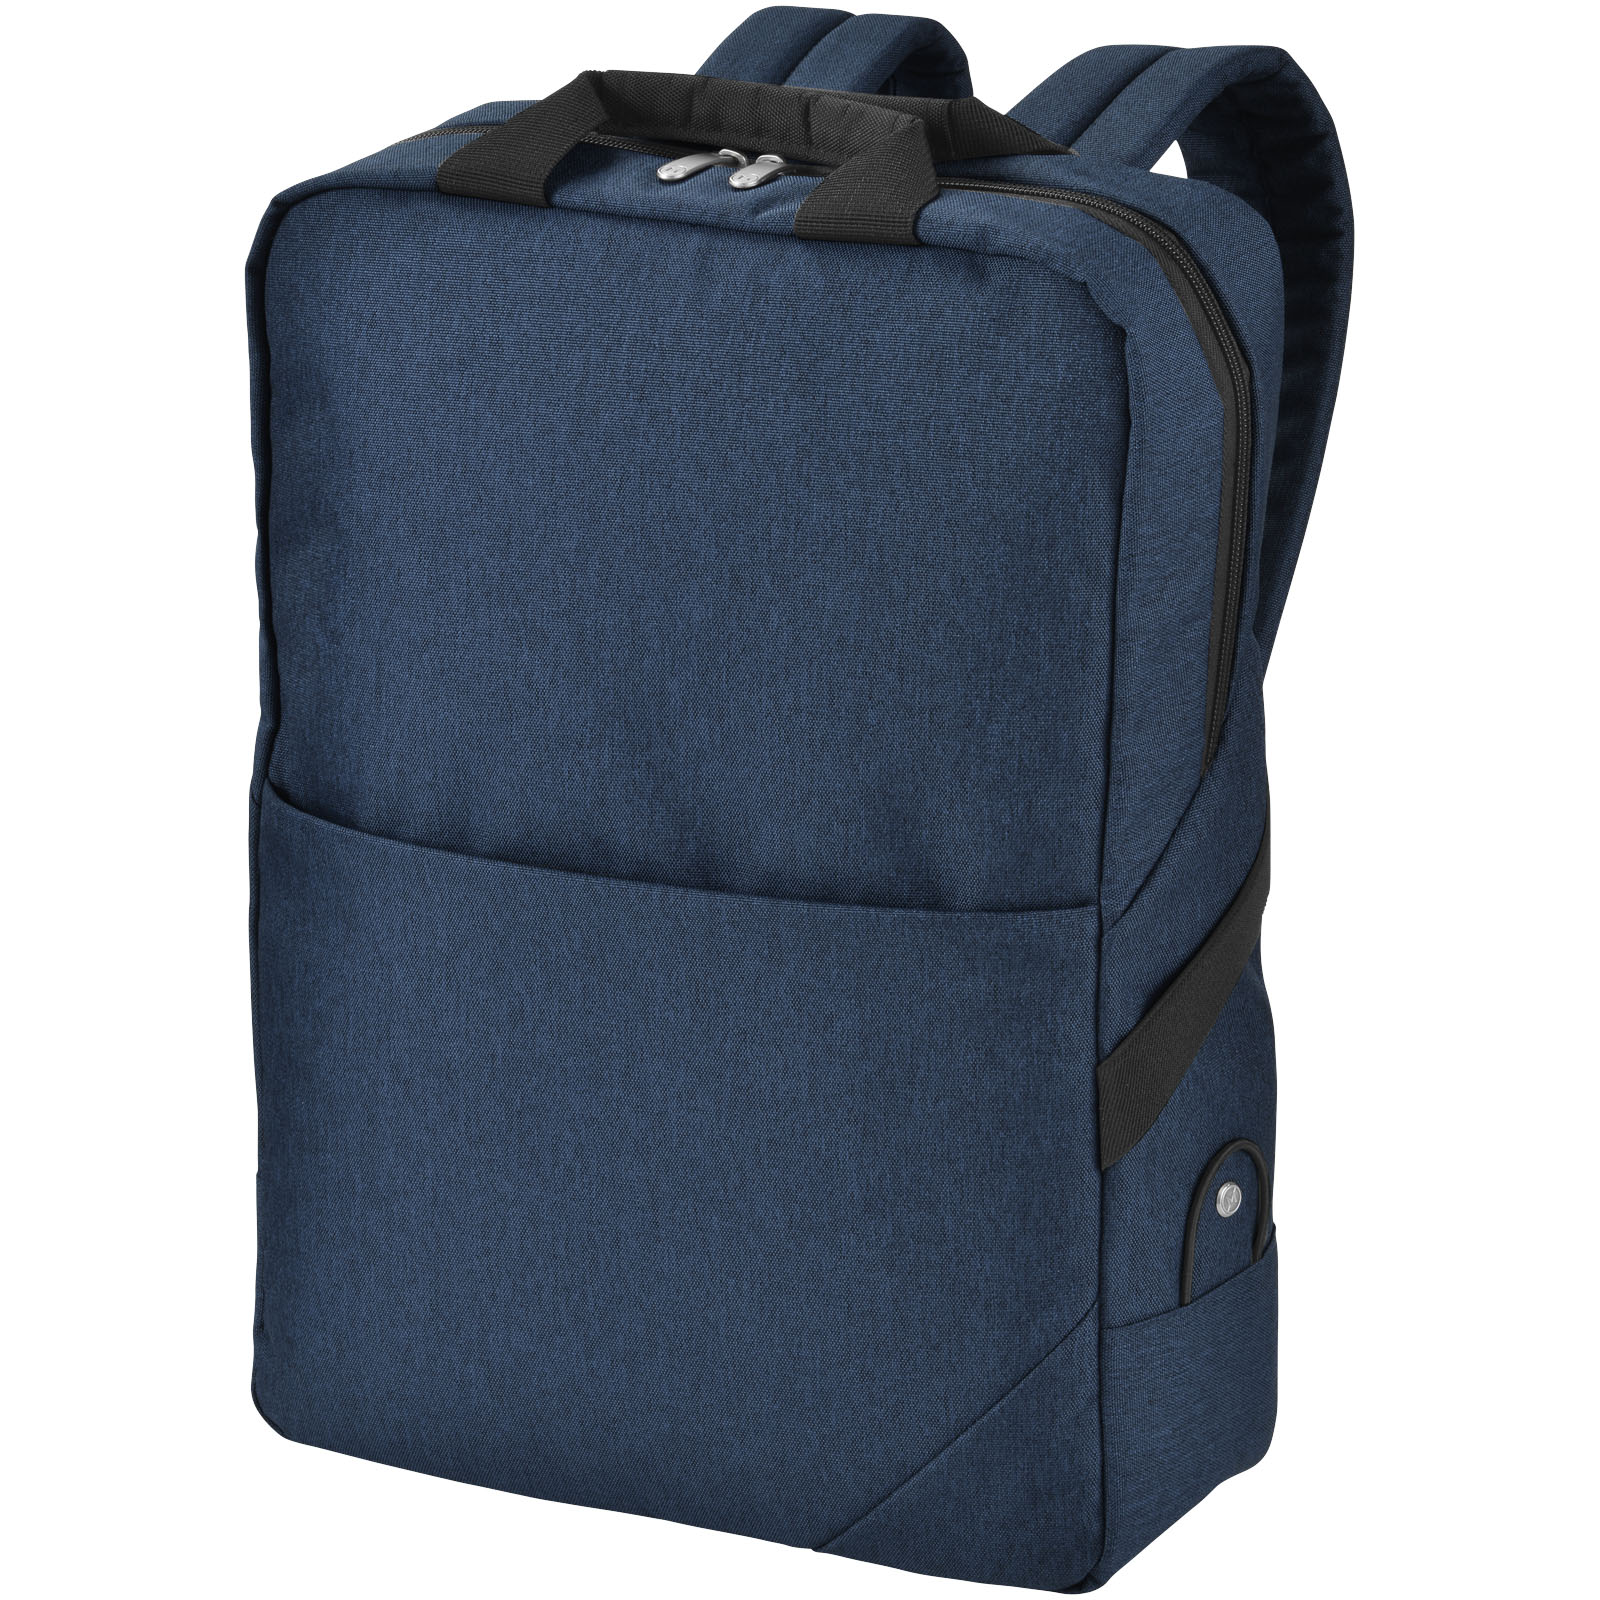 15.6" Laptop Backpack - Bibury - Banks